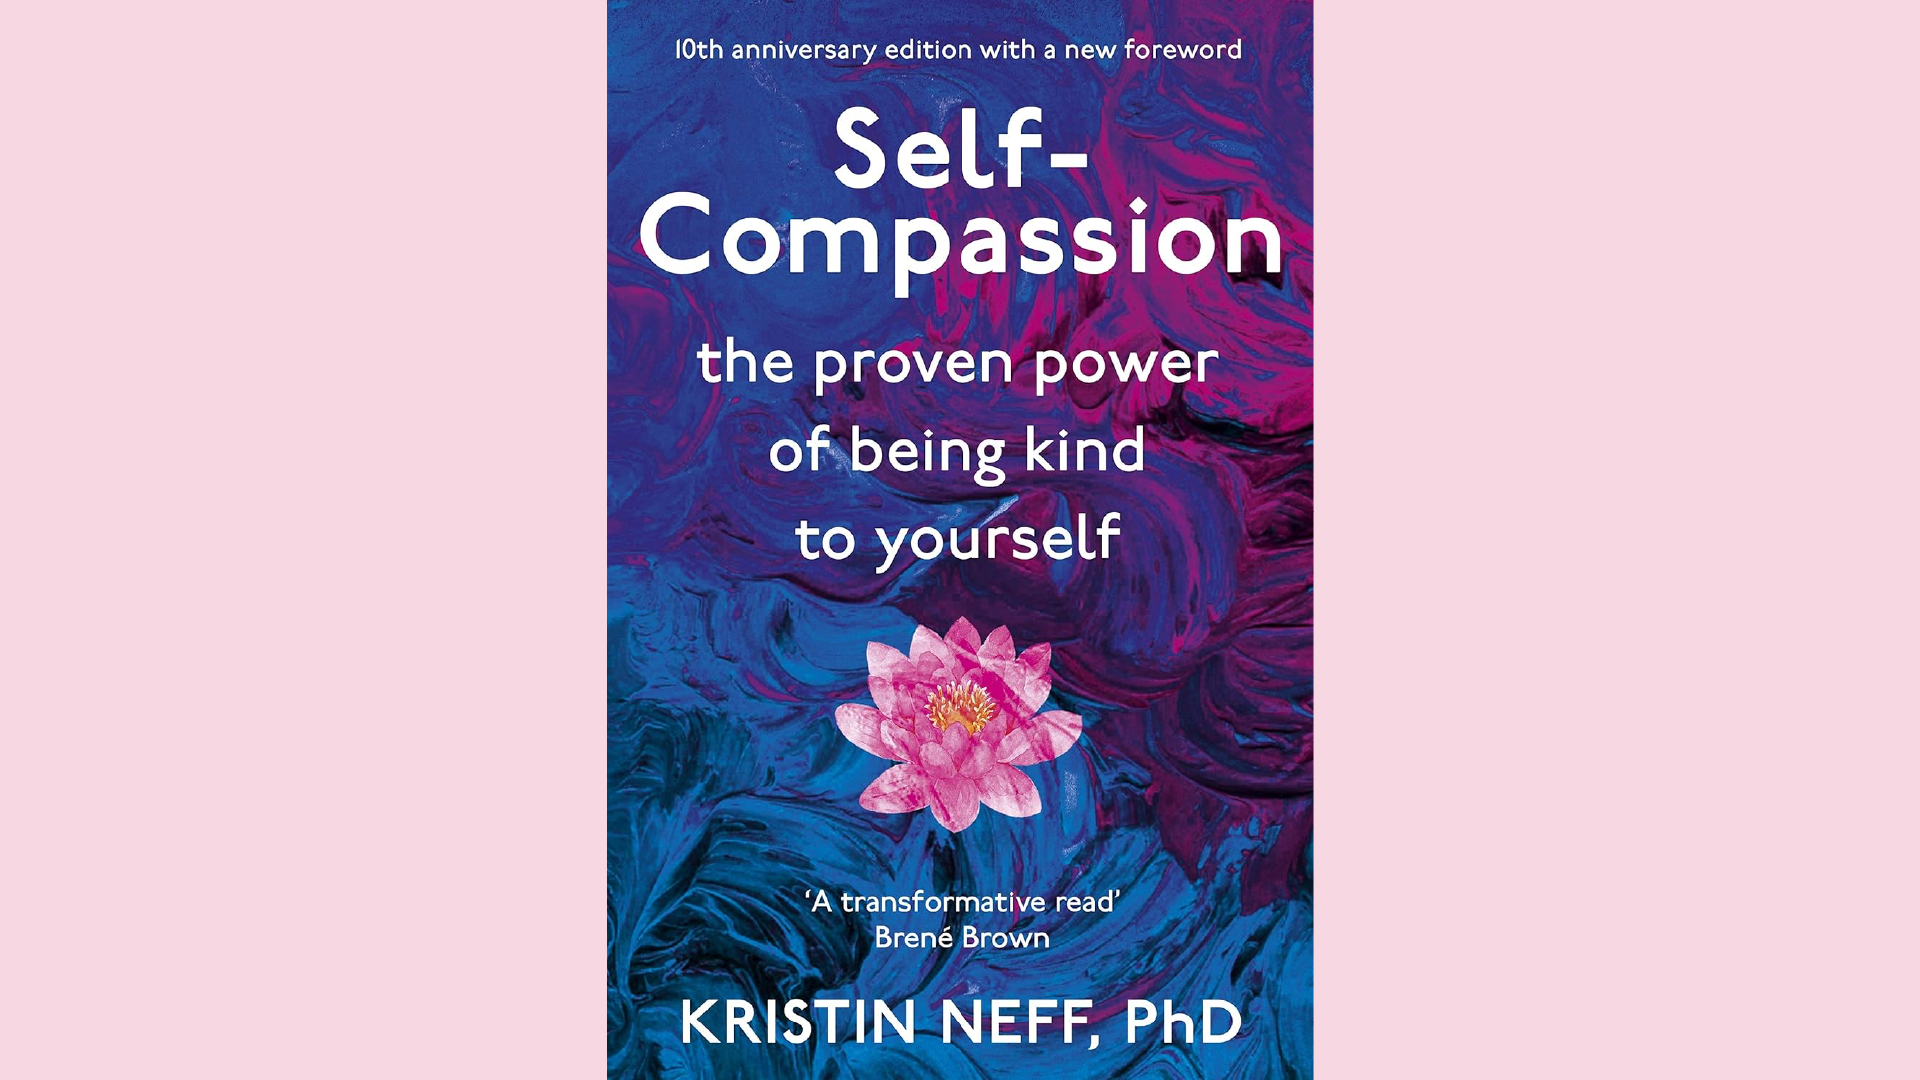 Summary: Self-Compassion by Kristin Neff